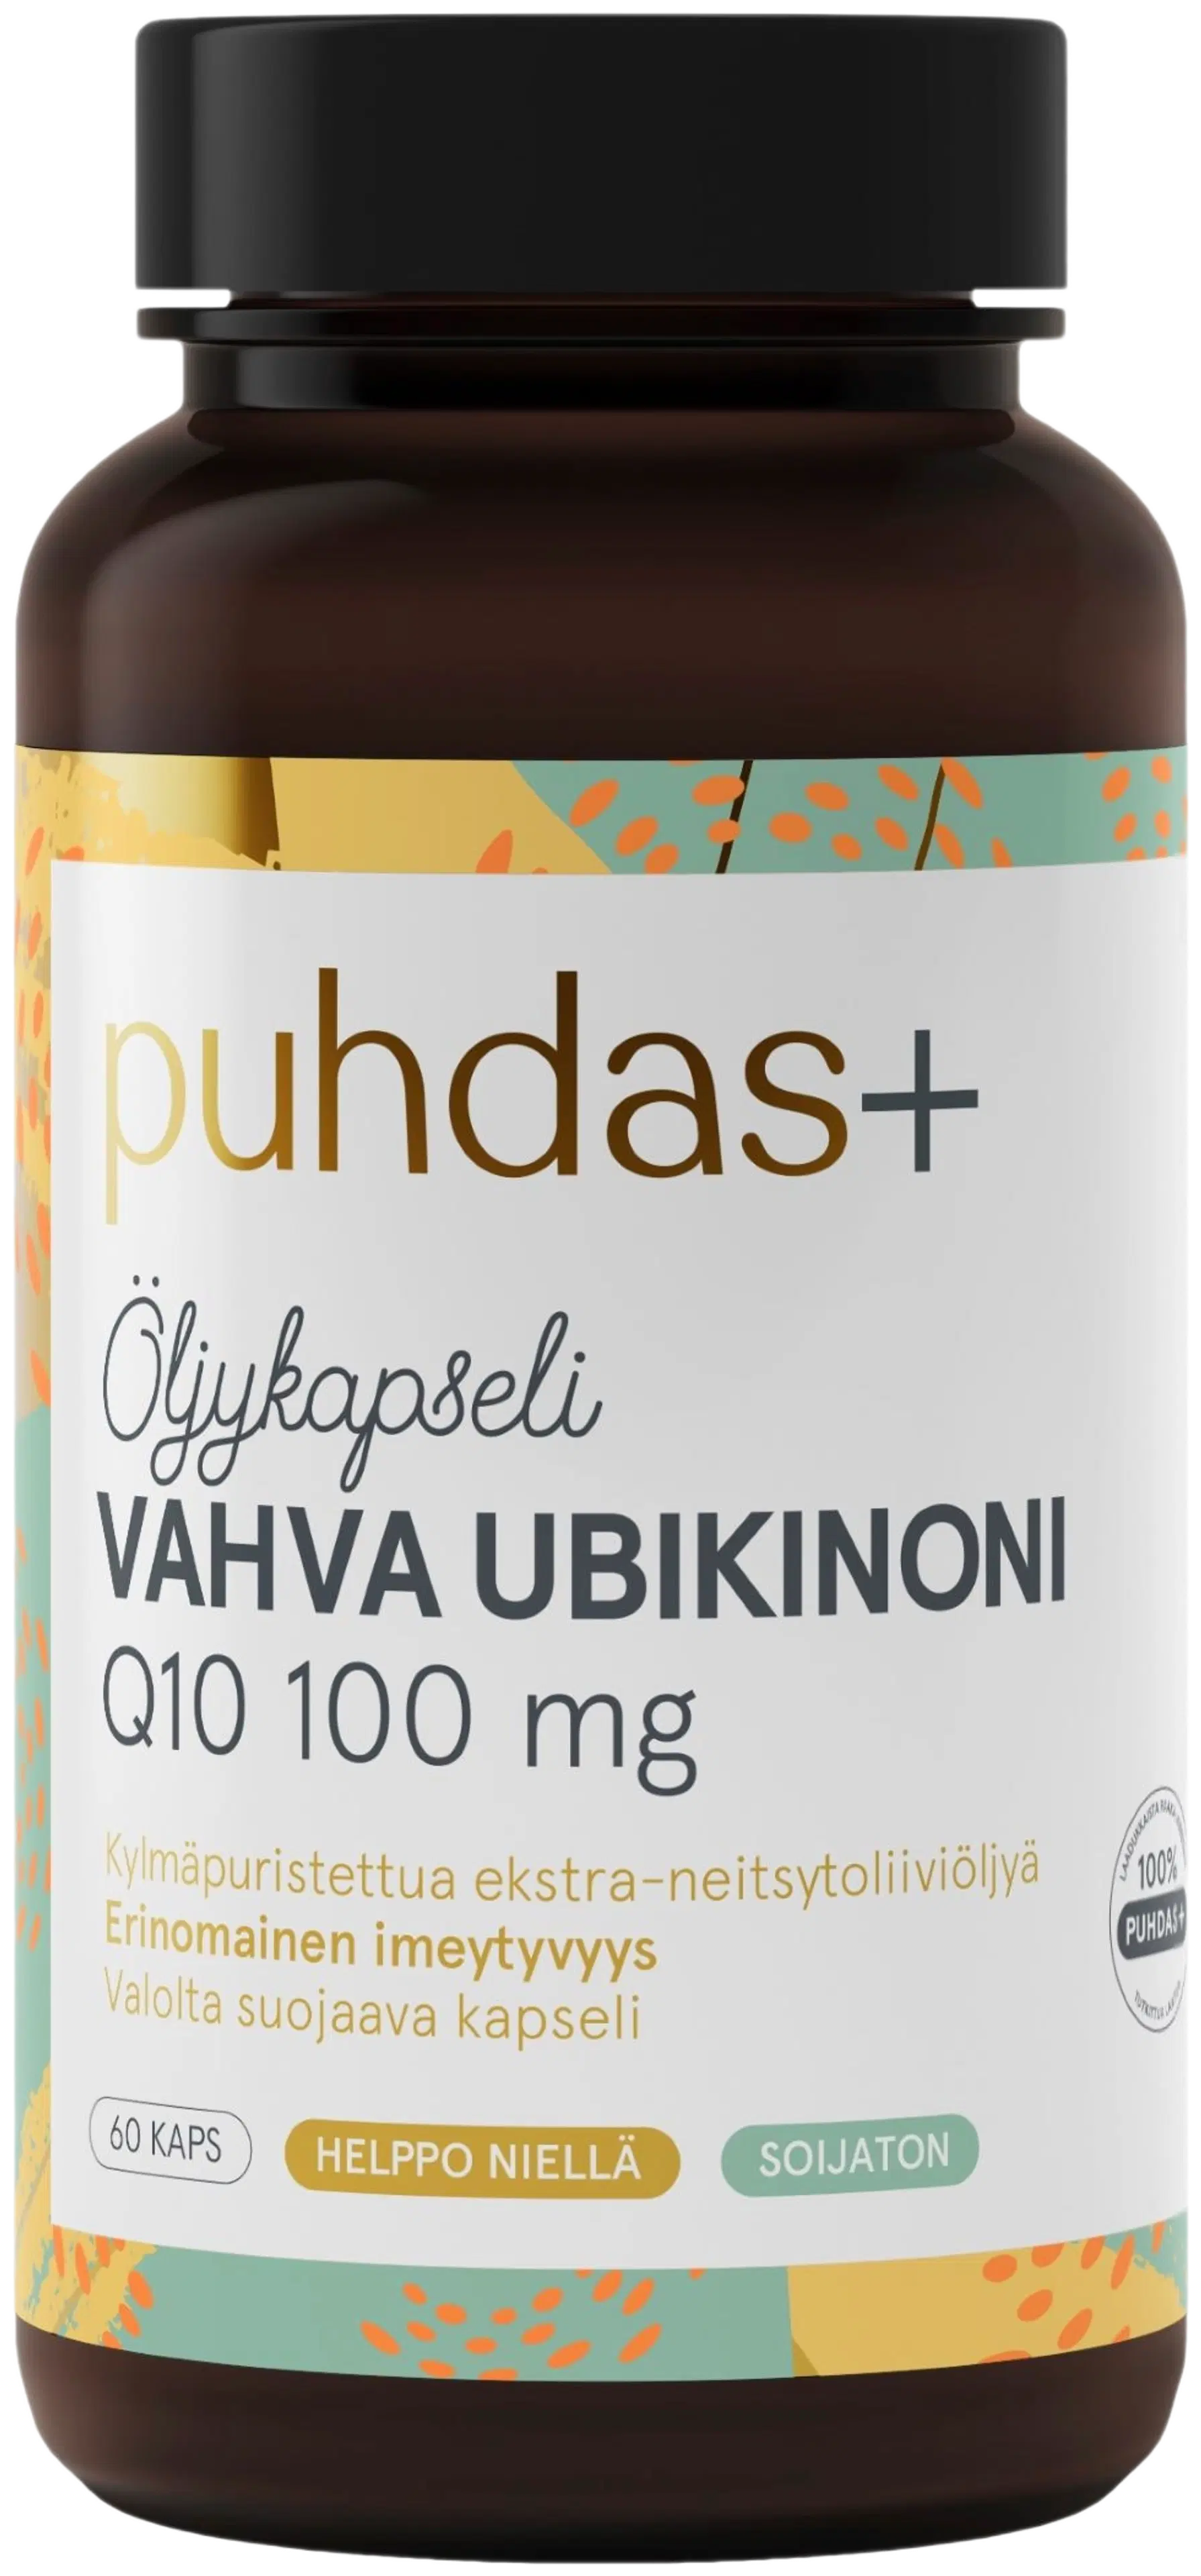 Puhdas+ Vahva Ubikinoni Q10 100 mg Öljykapseli 60 kaps